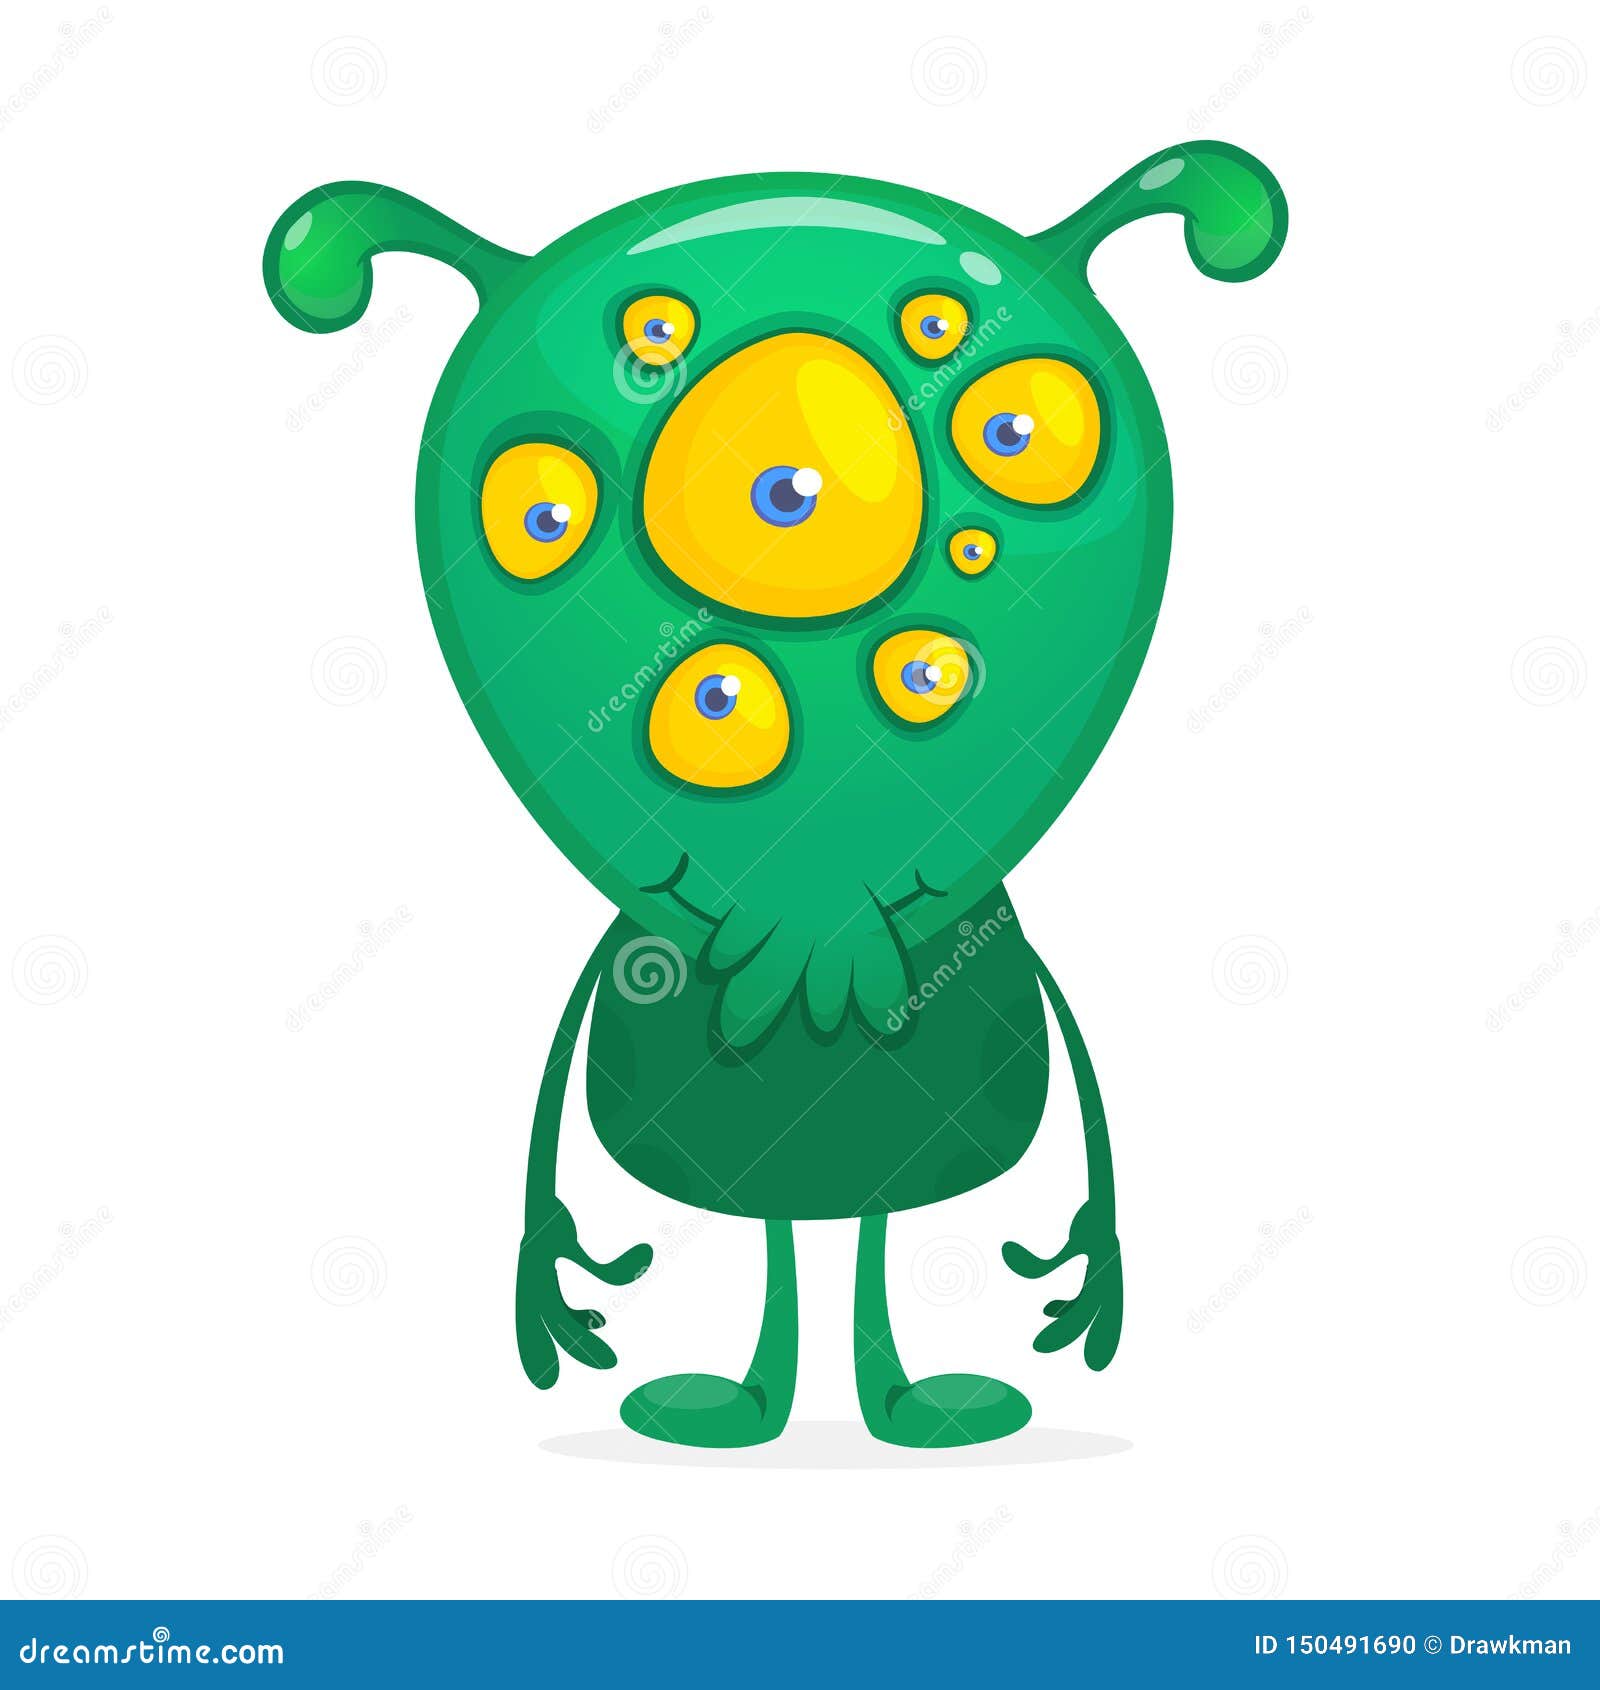 Green Alien Cartoon with Many Eyes Stock Vector - Illustration of cute,  funny: 150491690